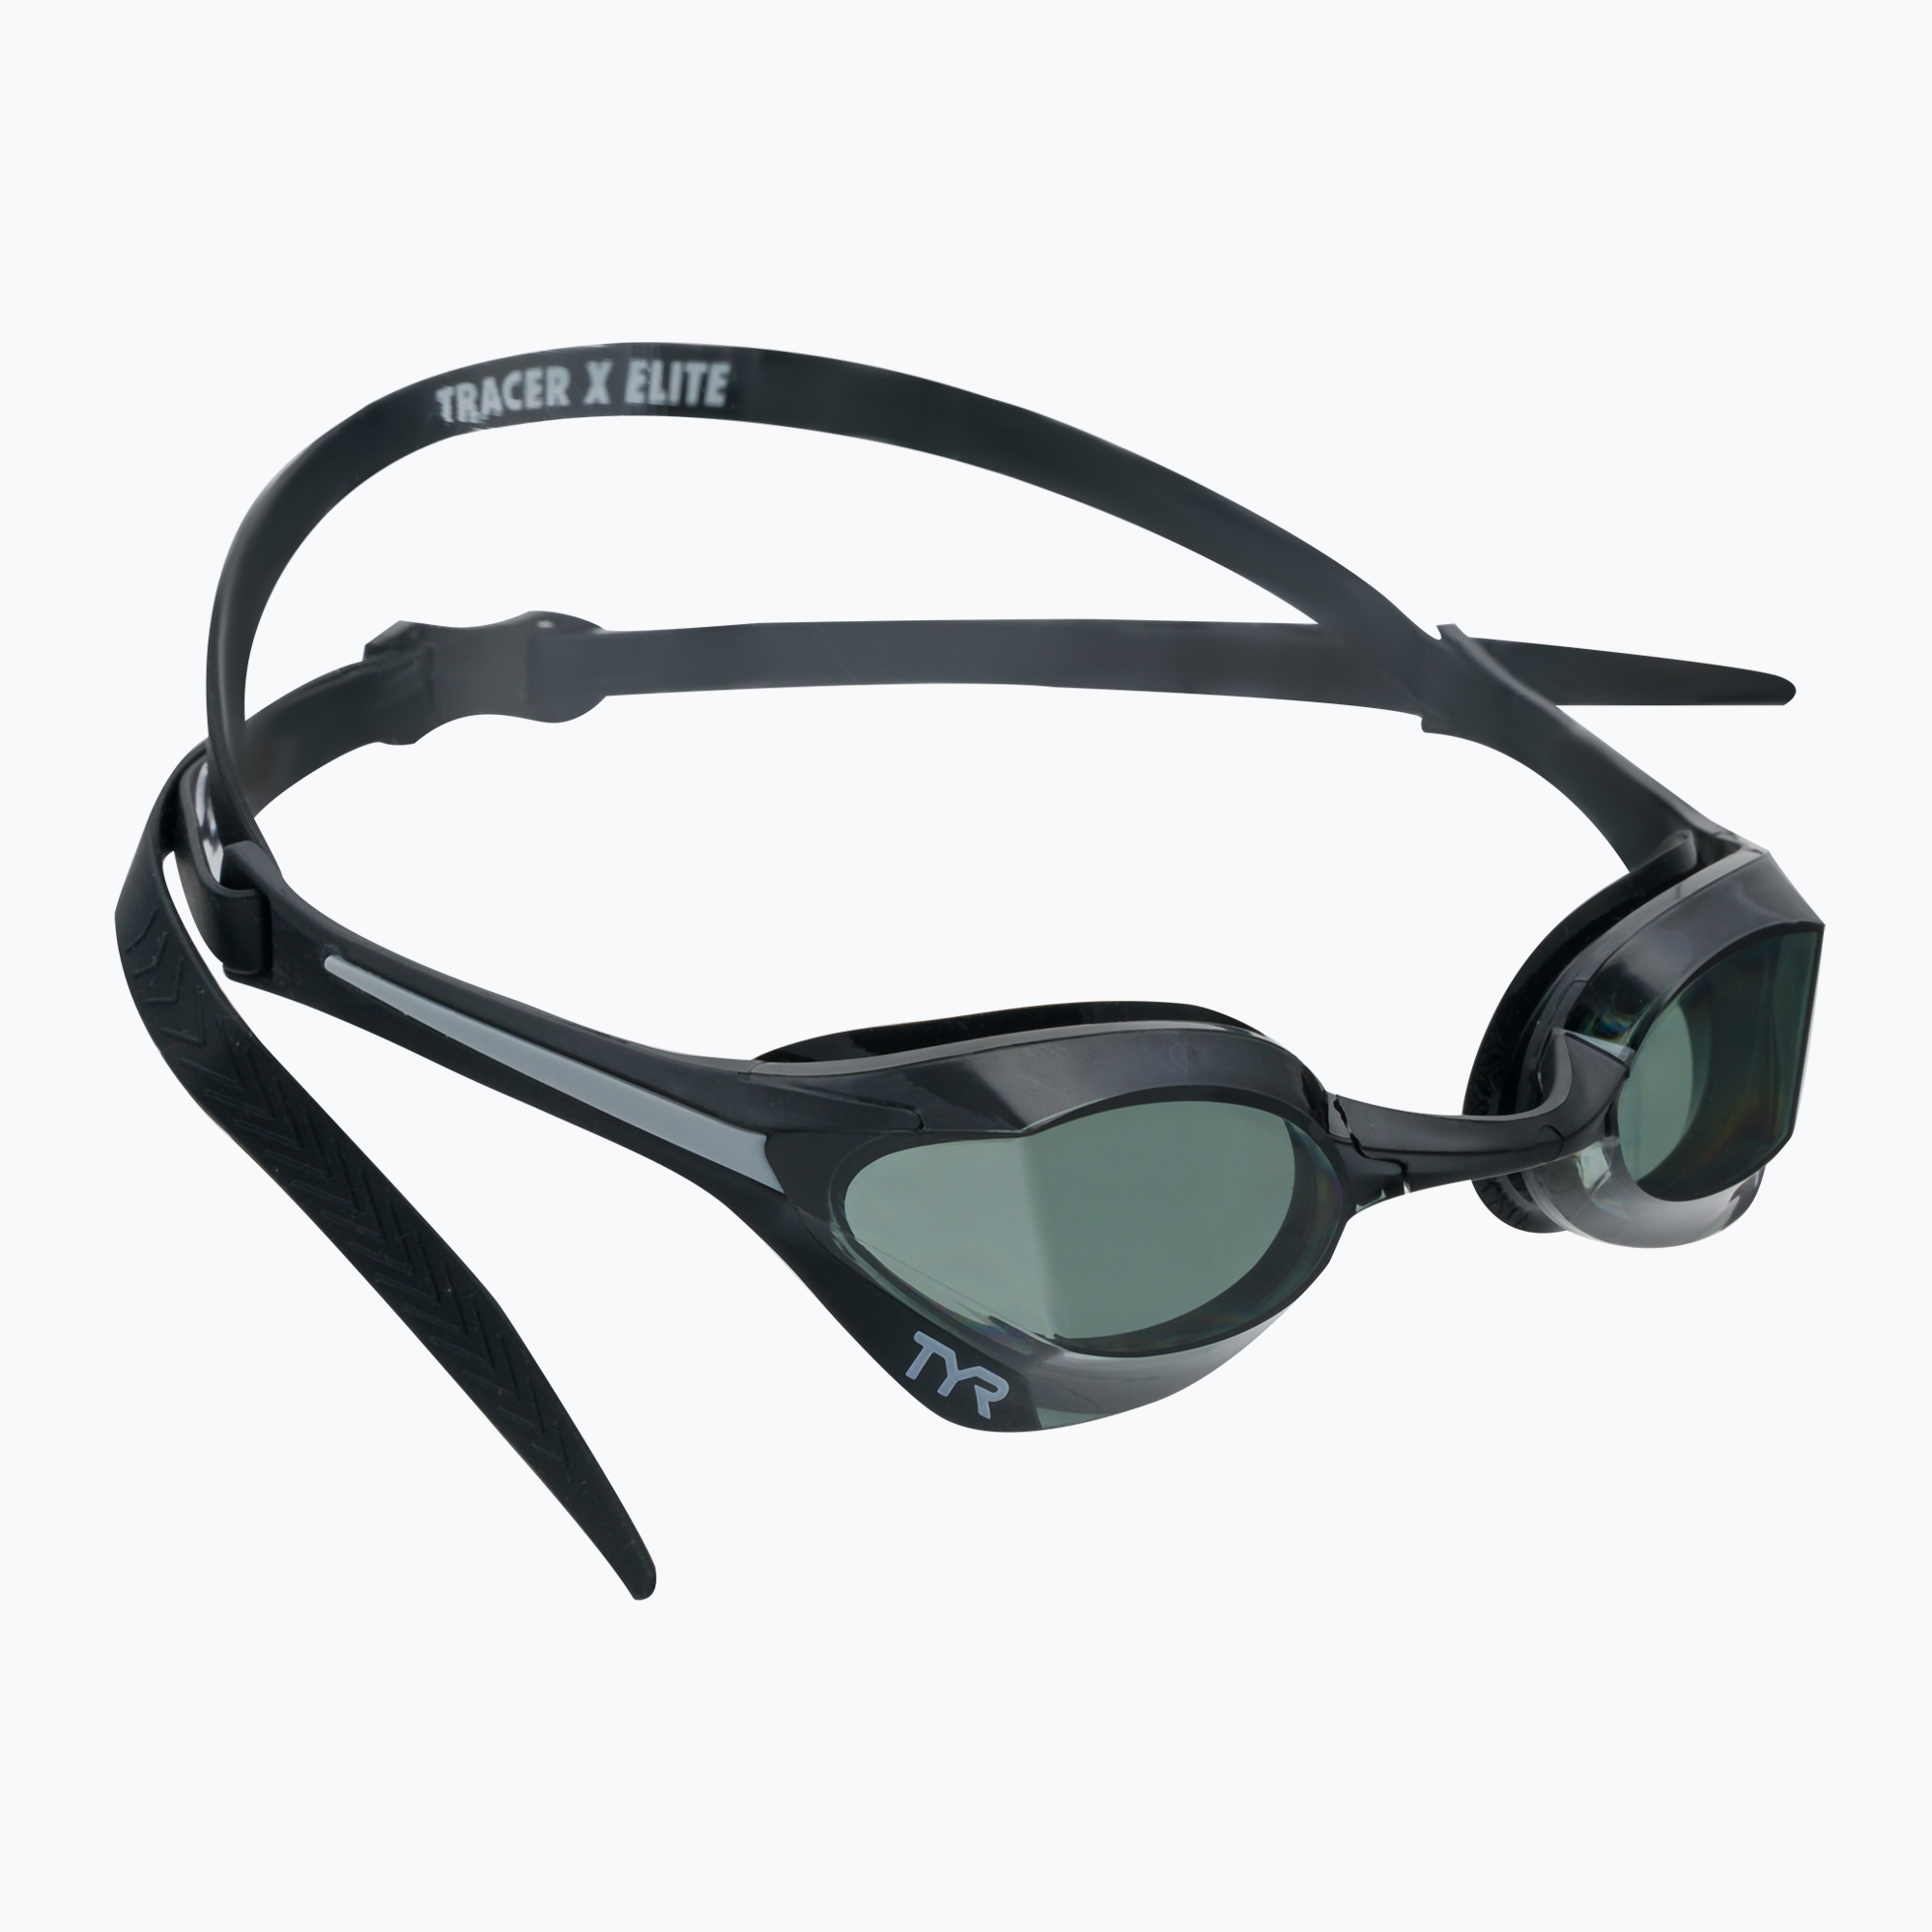 Plavecké okuliare TYR Tracer-X Elite čierne LGTRXEL